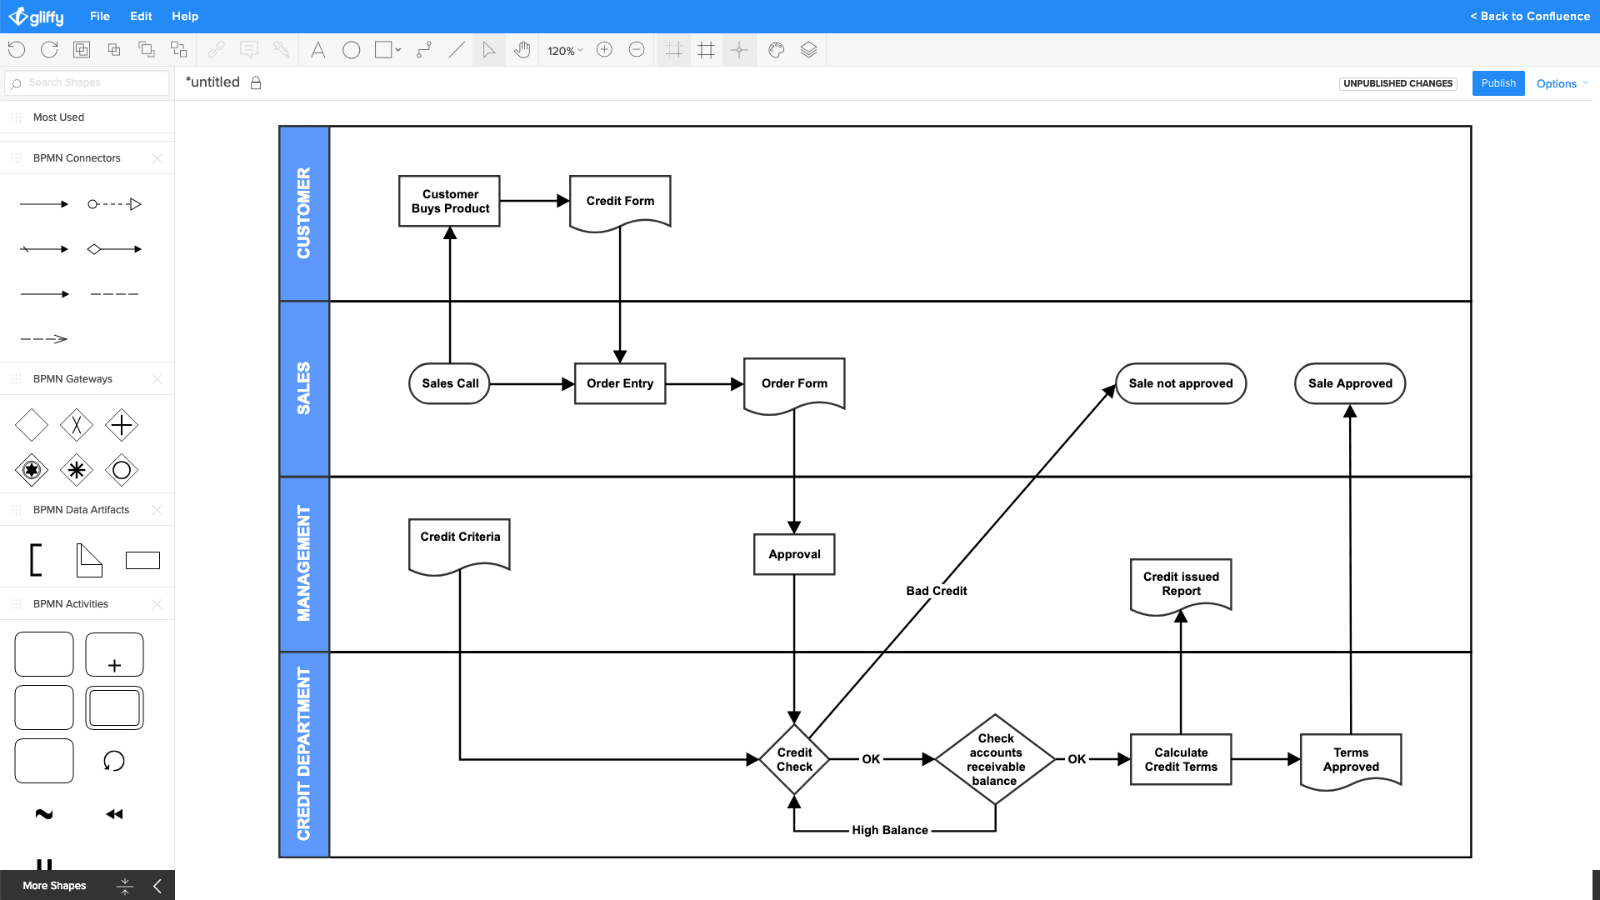 Sample eCommerce transaction process diagram courtesy of gliffy